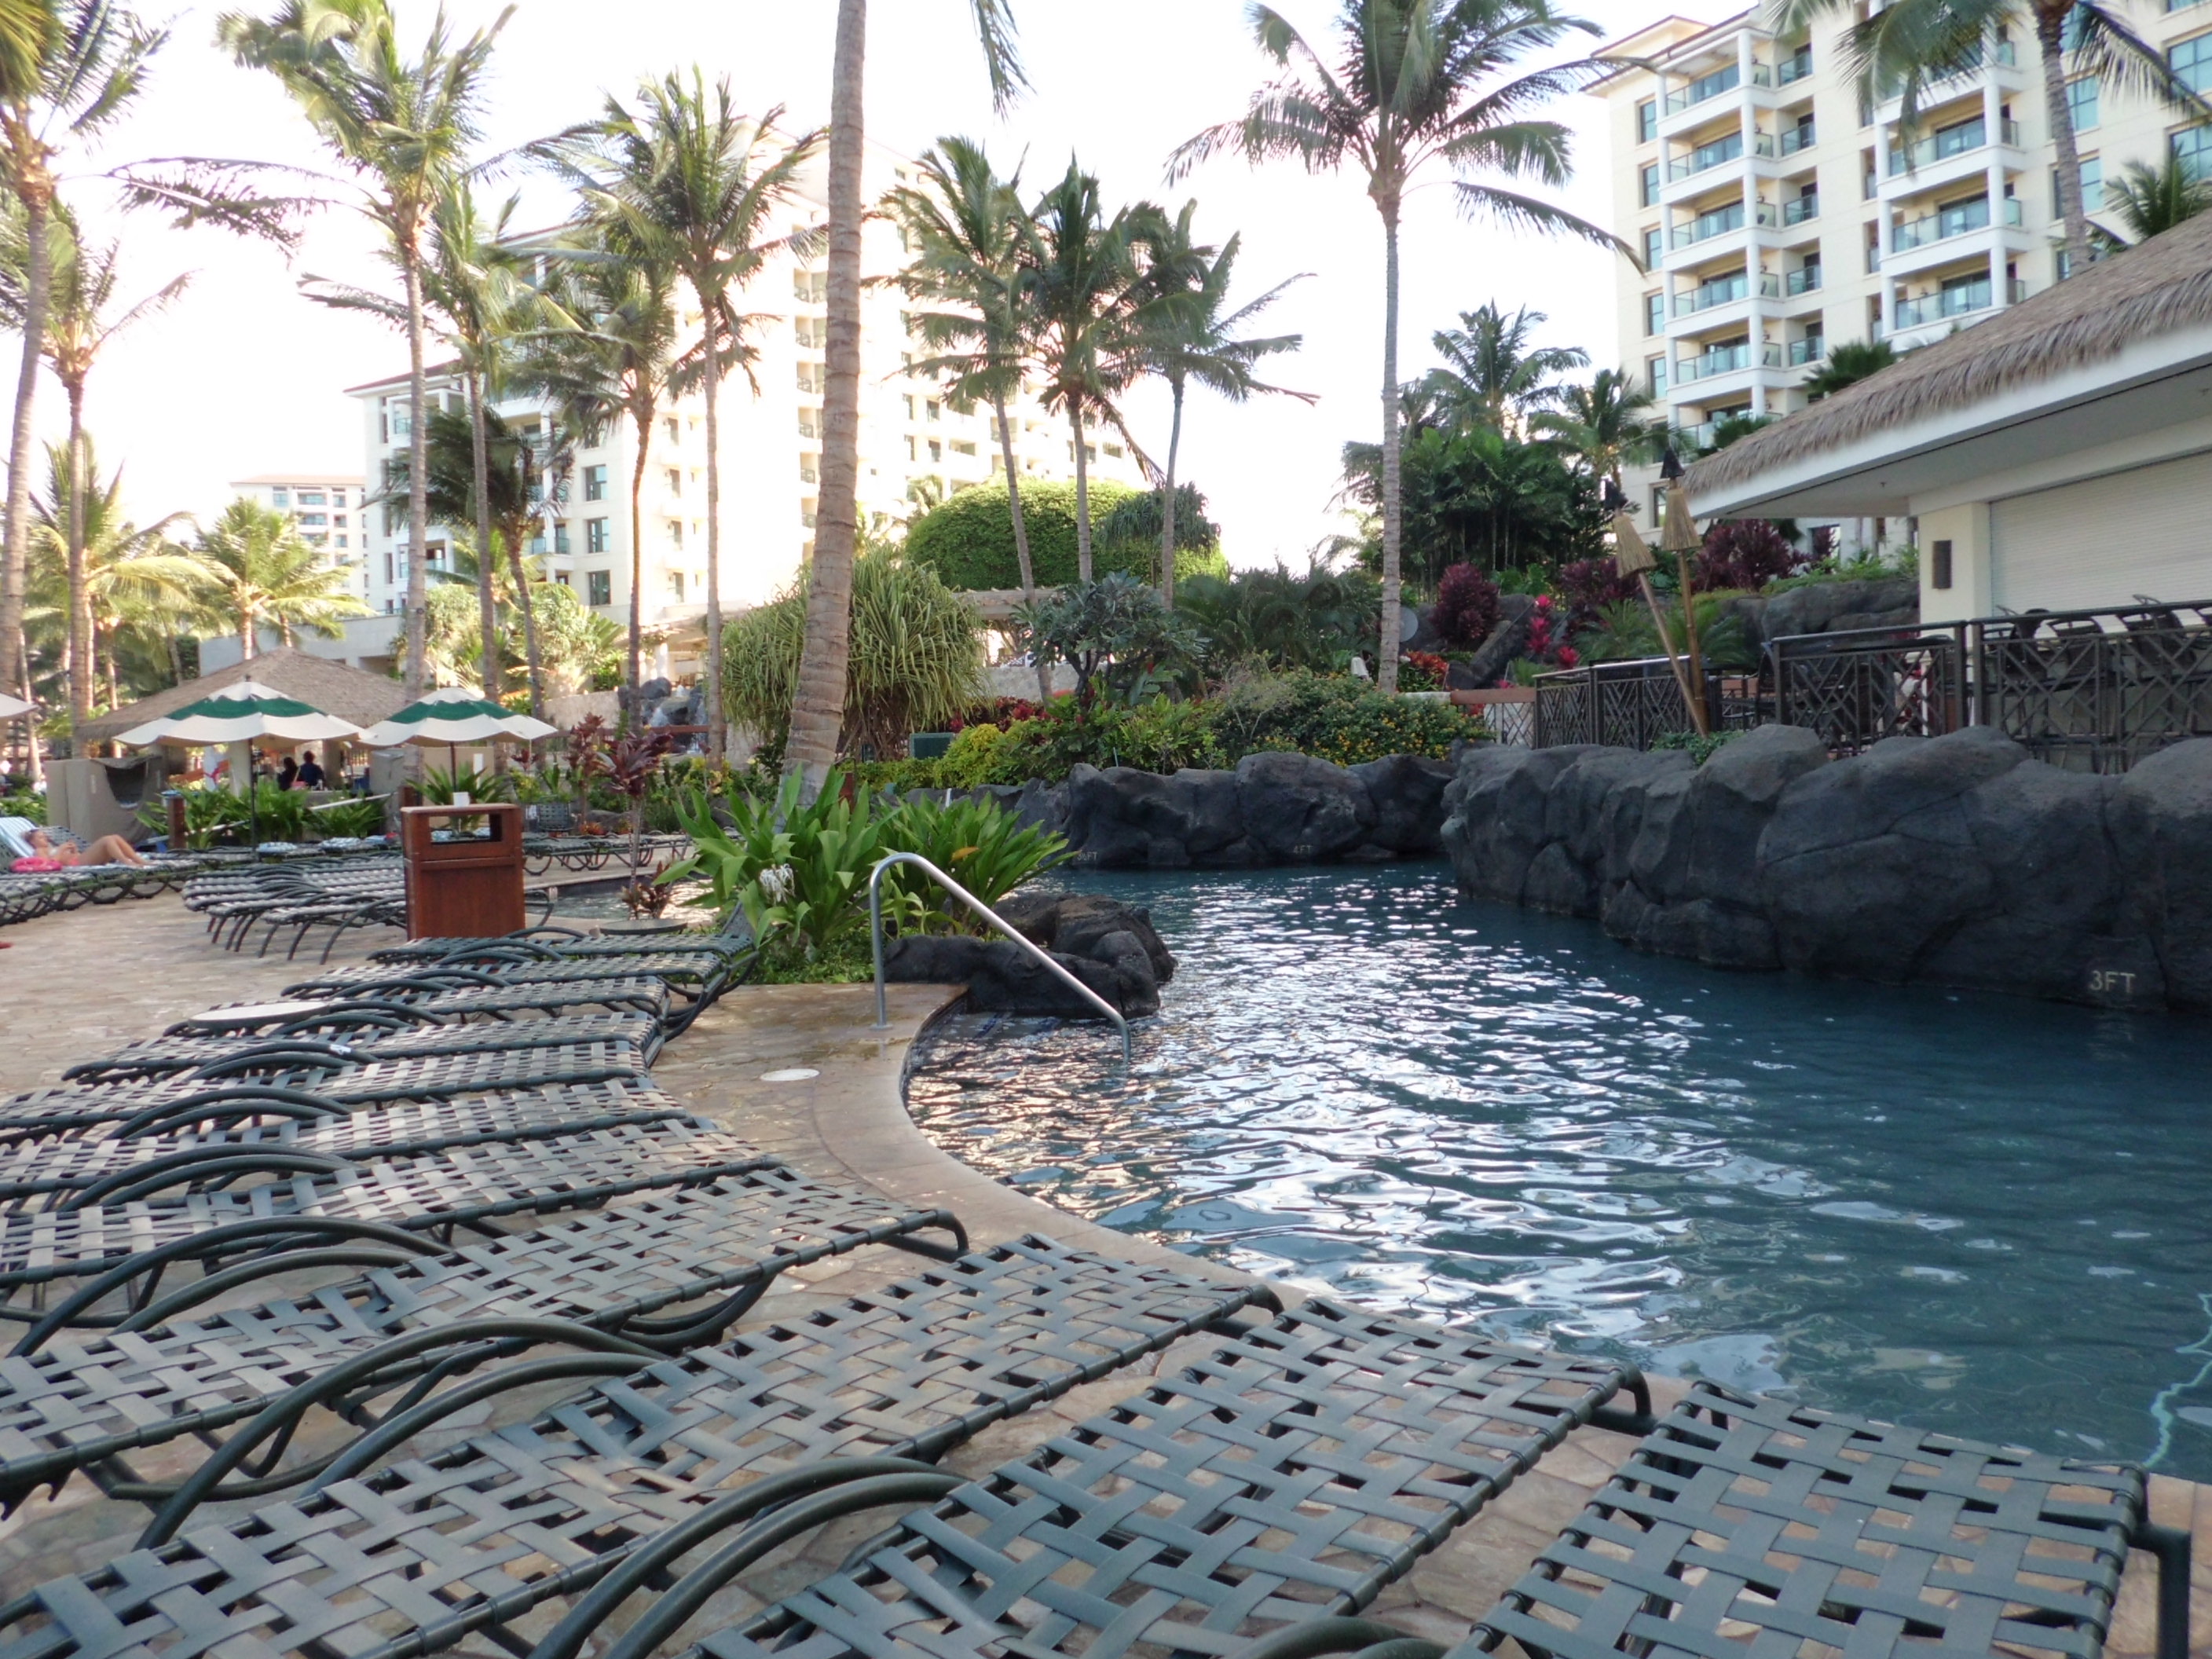 Marriott Vacation Club Ko Olina Slide Pool Chaise